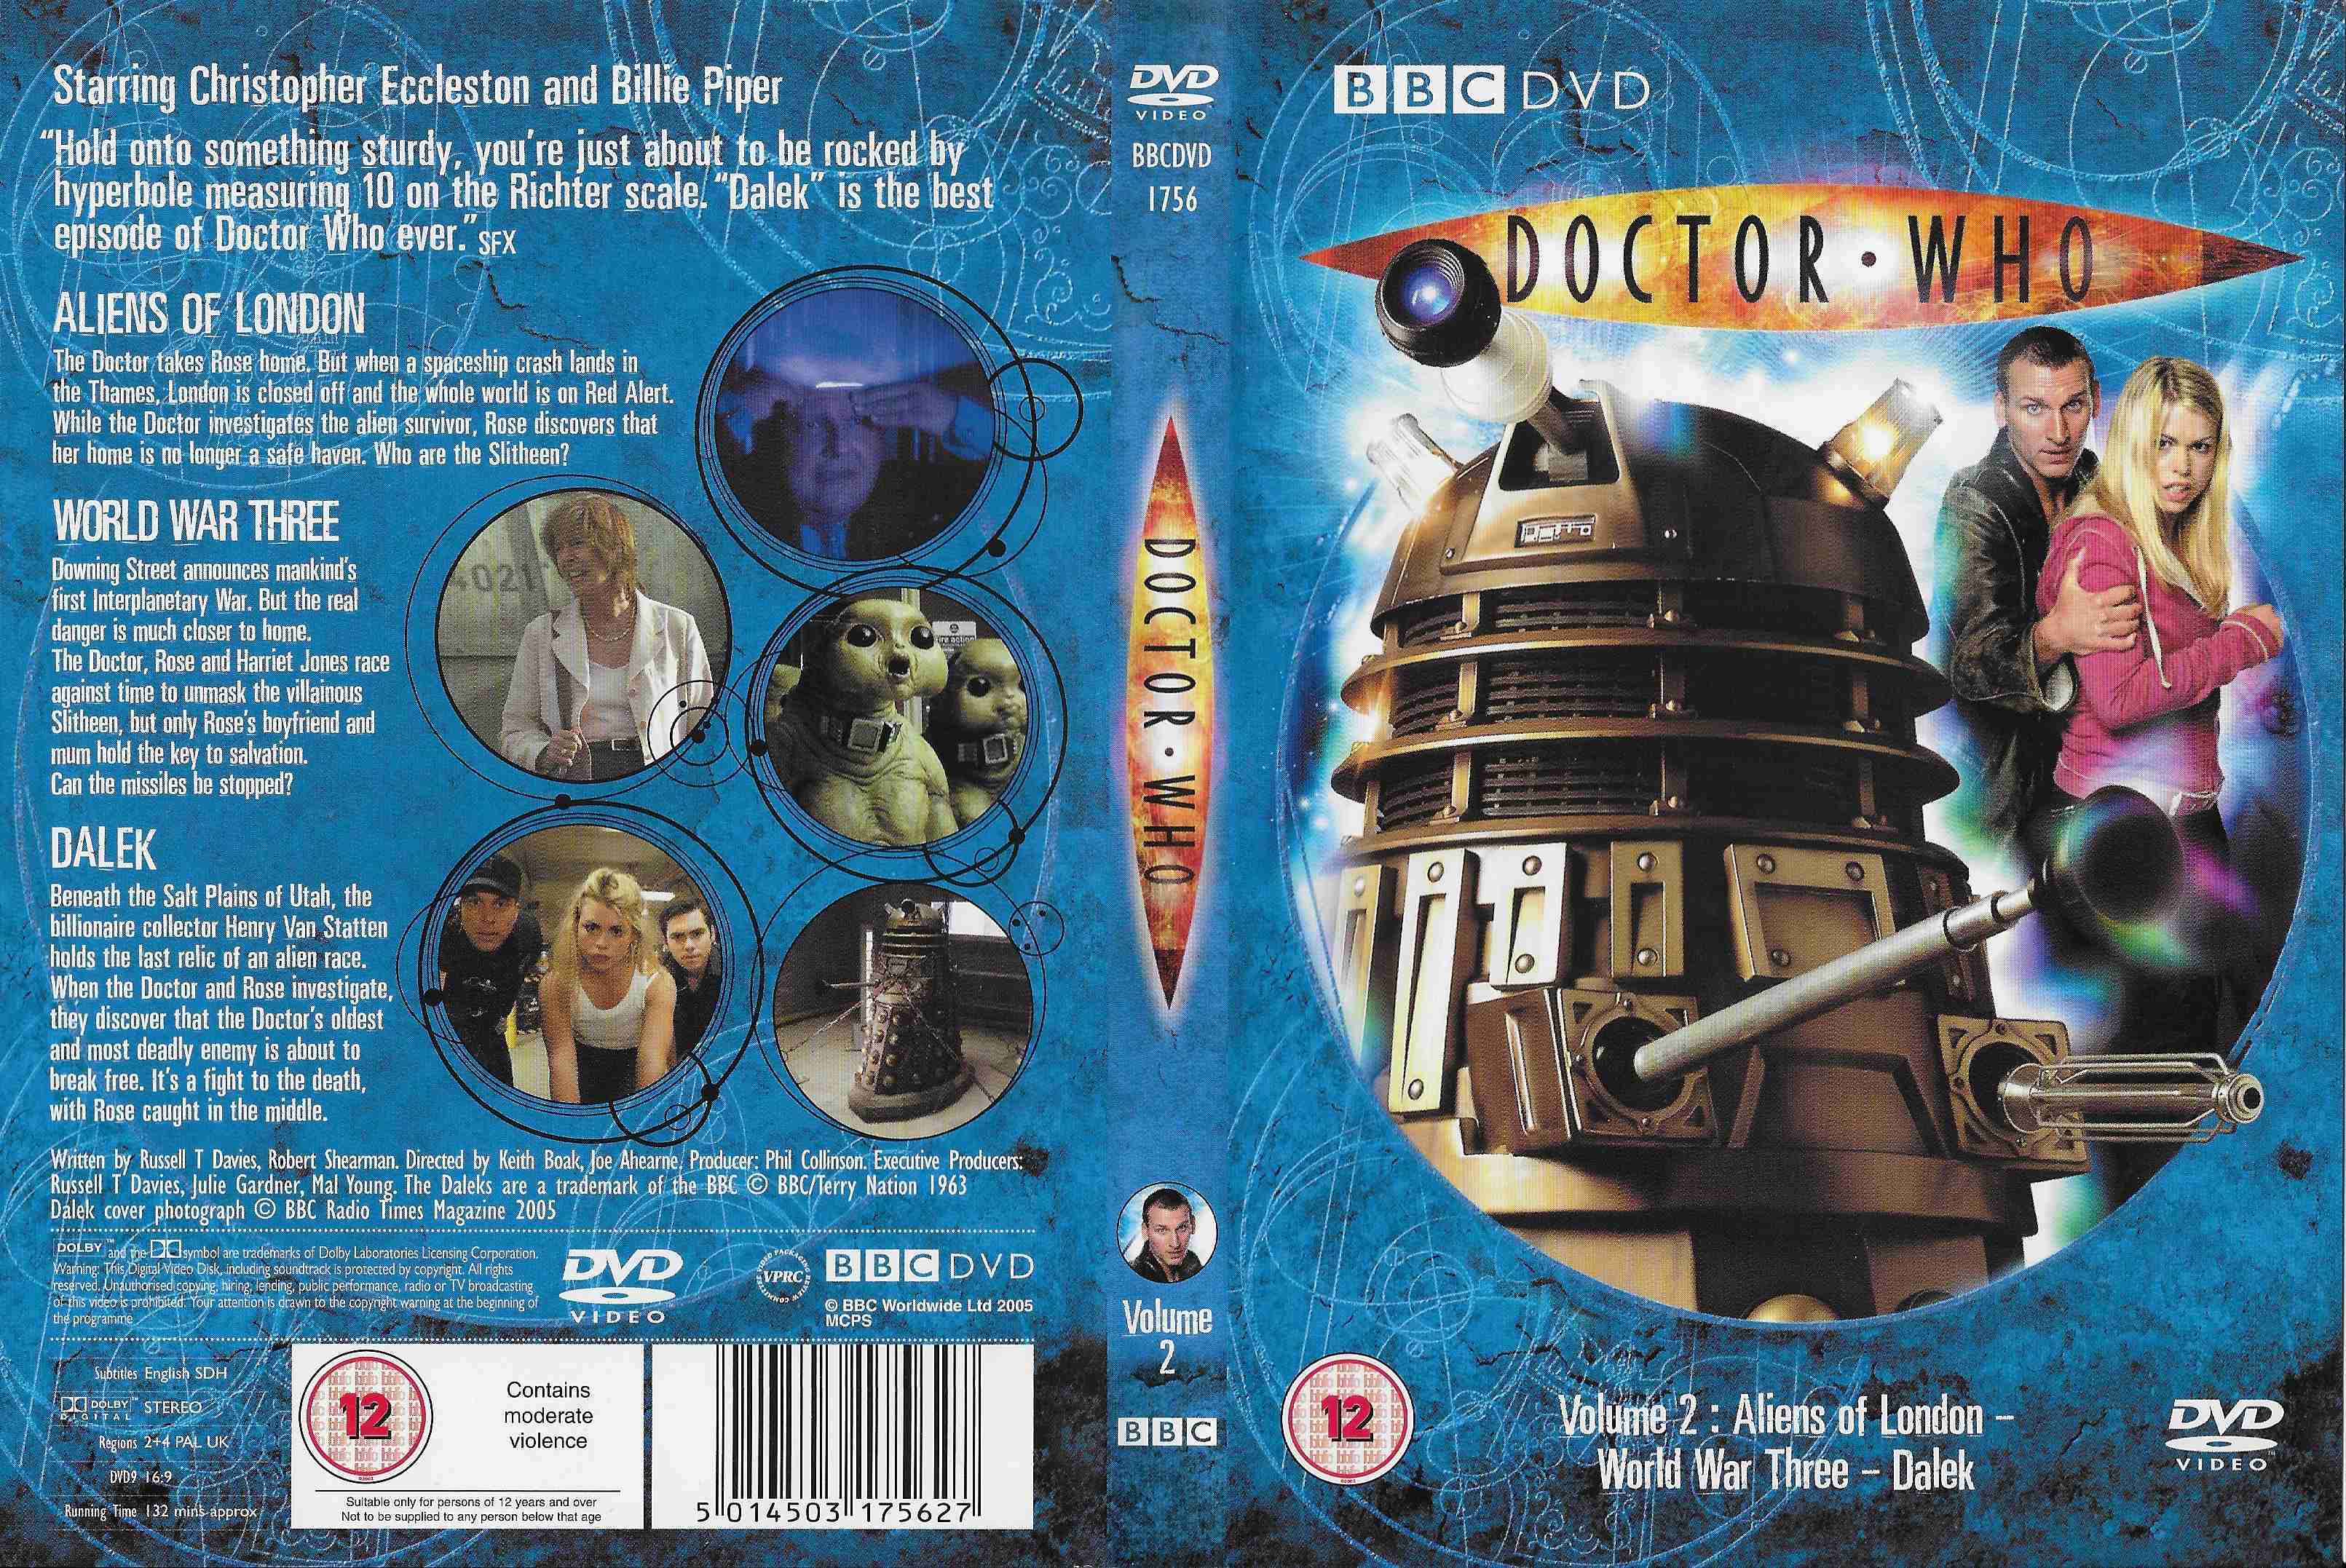 Back cover of BBCDVD 1756